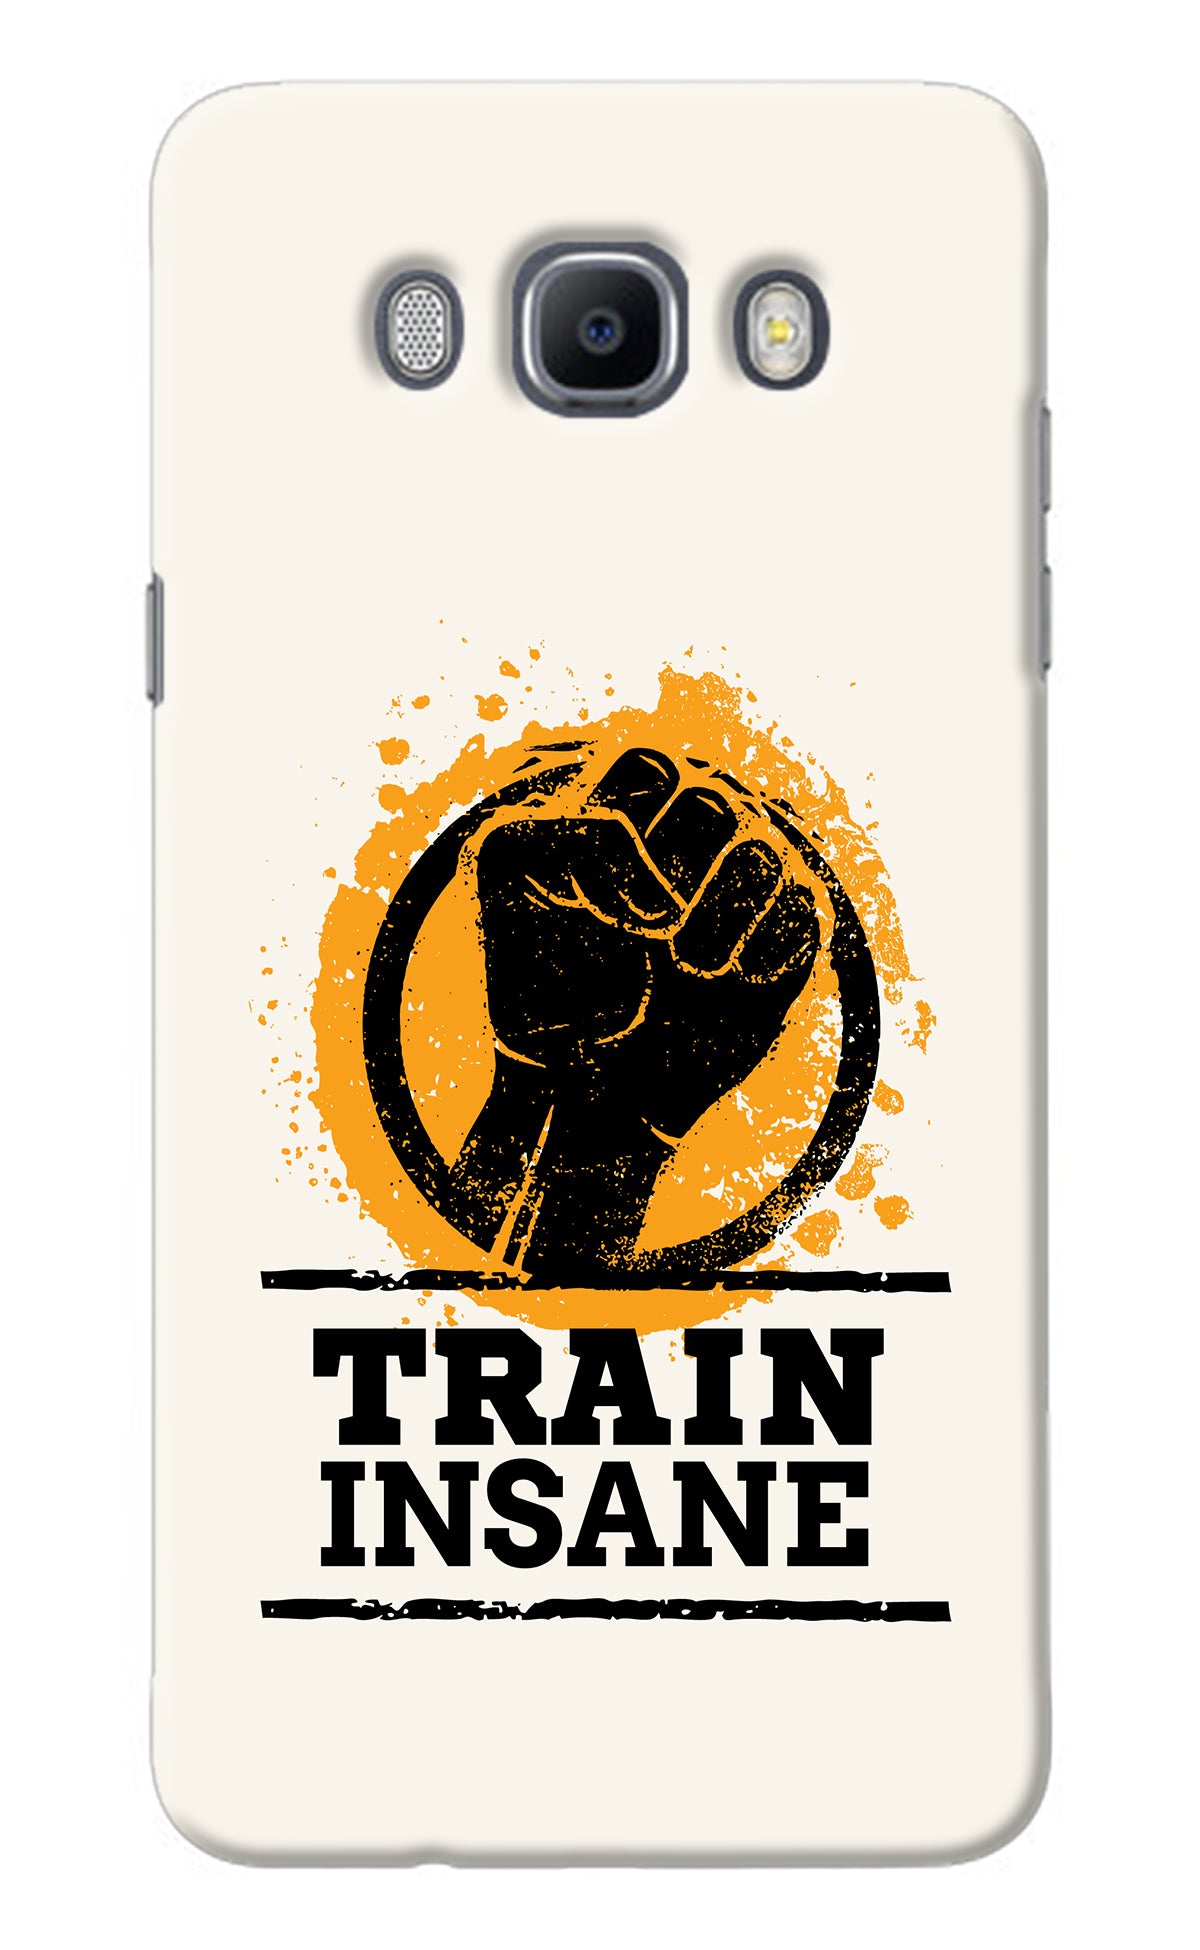 Train Insane Samsung J7 2016 Back Cover